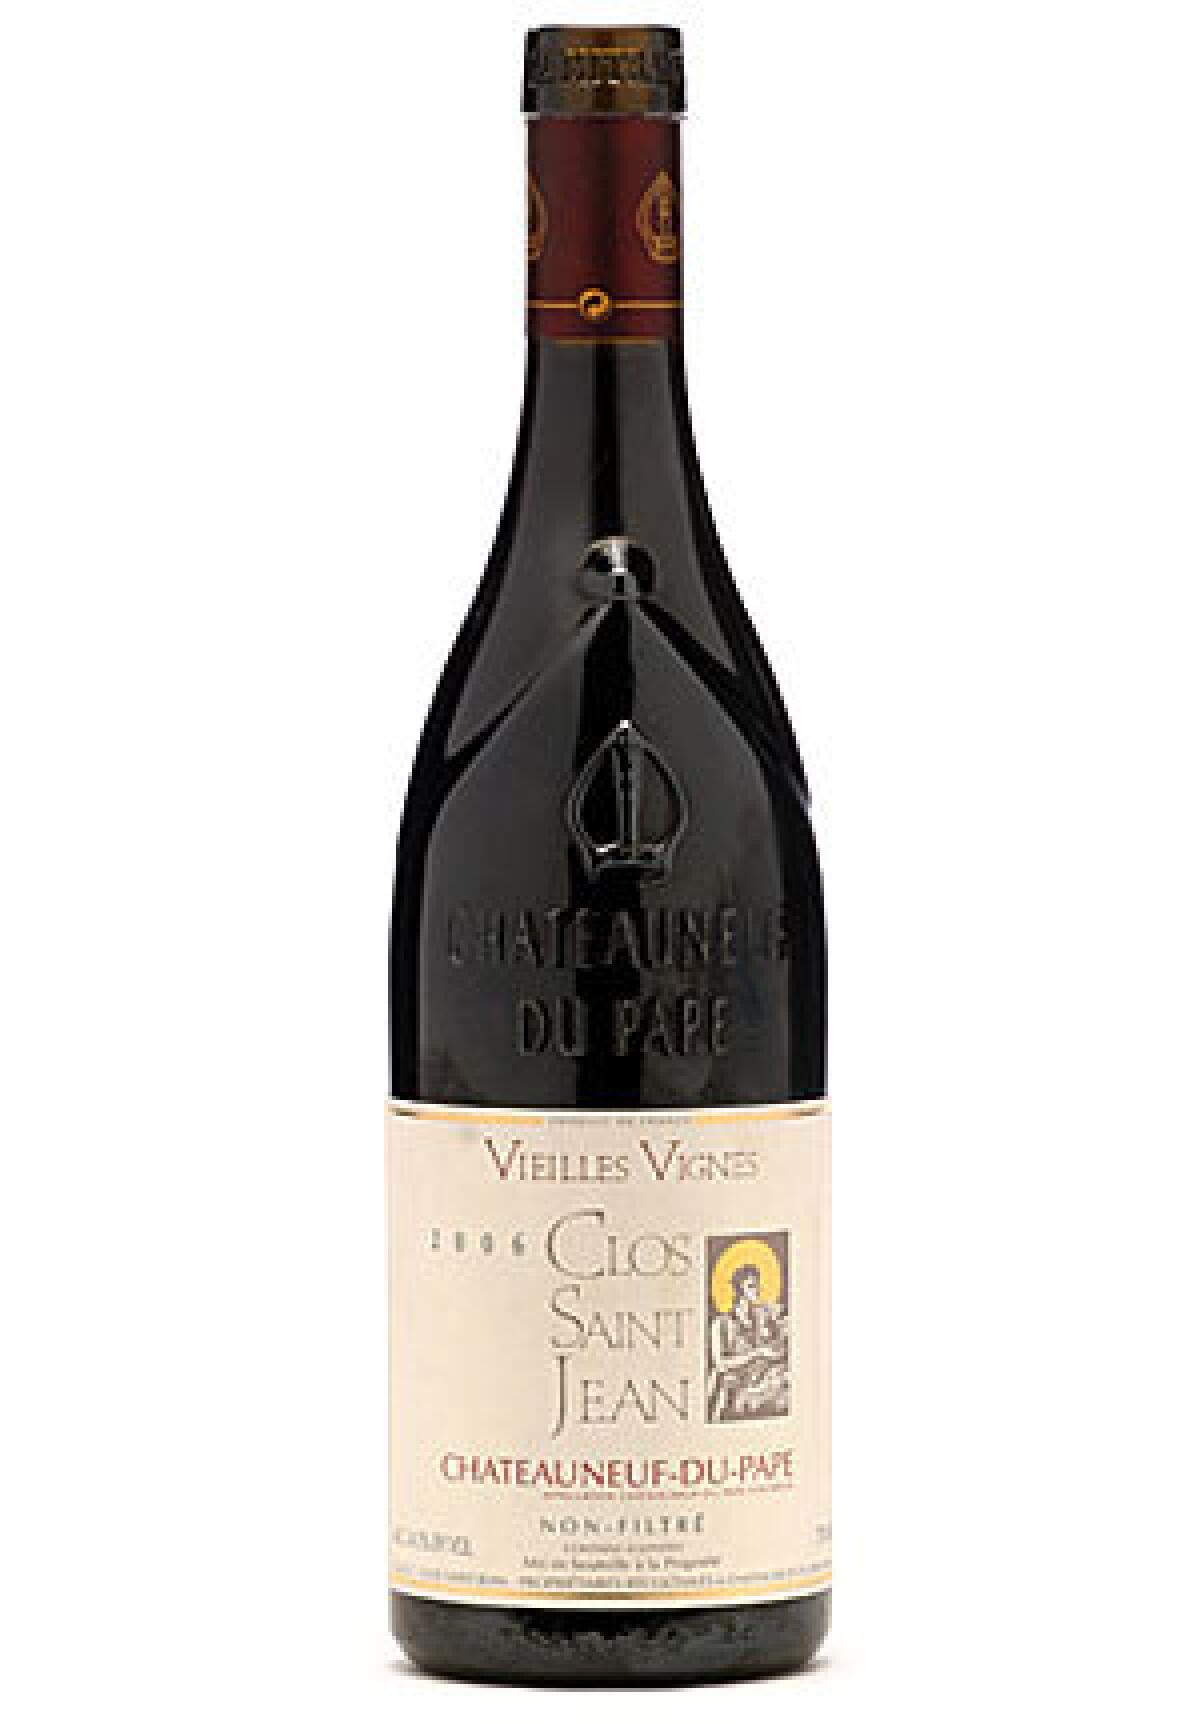 WINE OF THE WEEK: 2006 Clos Saint Jean Chateauneuf-du-Pape "Vieilles Vignes." Click here for details.